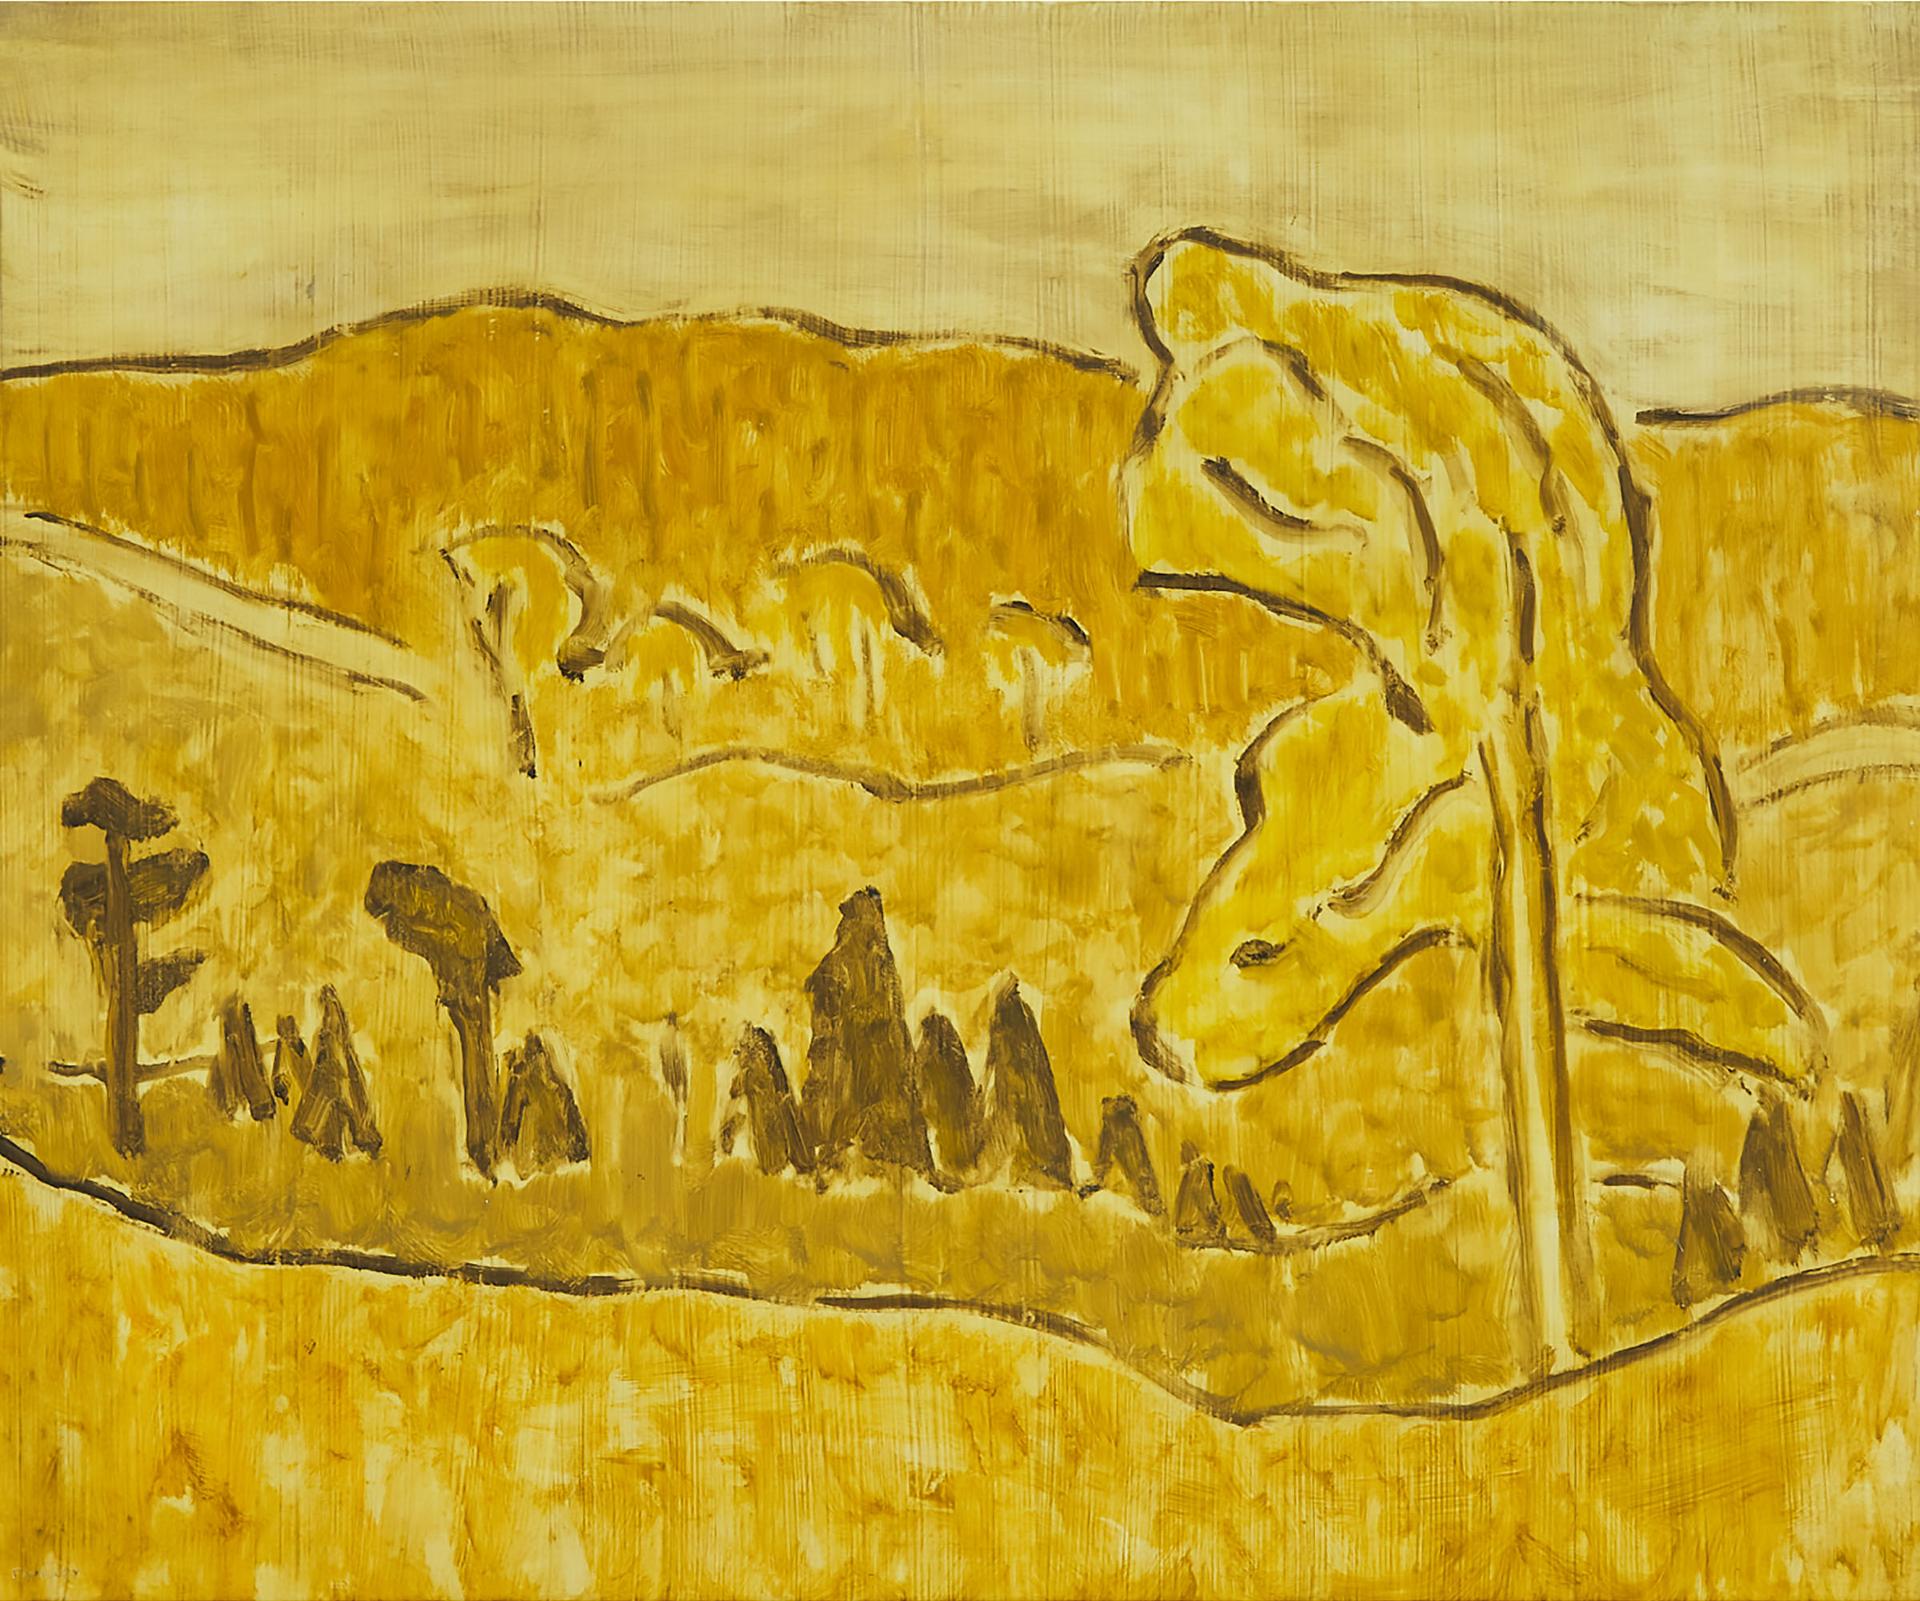 Barker Fairley (1887-1986) - Yellow Tree, 1965